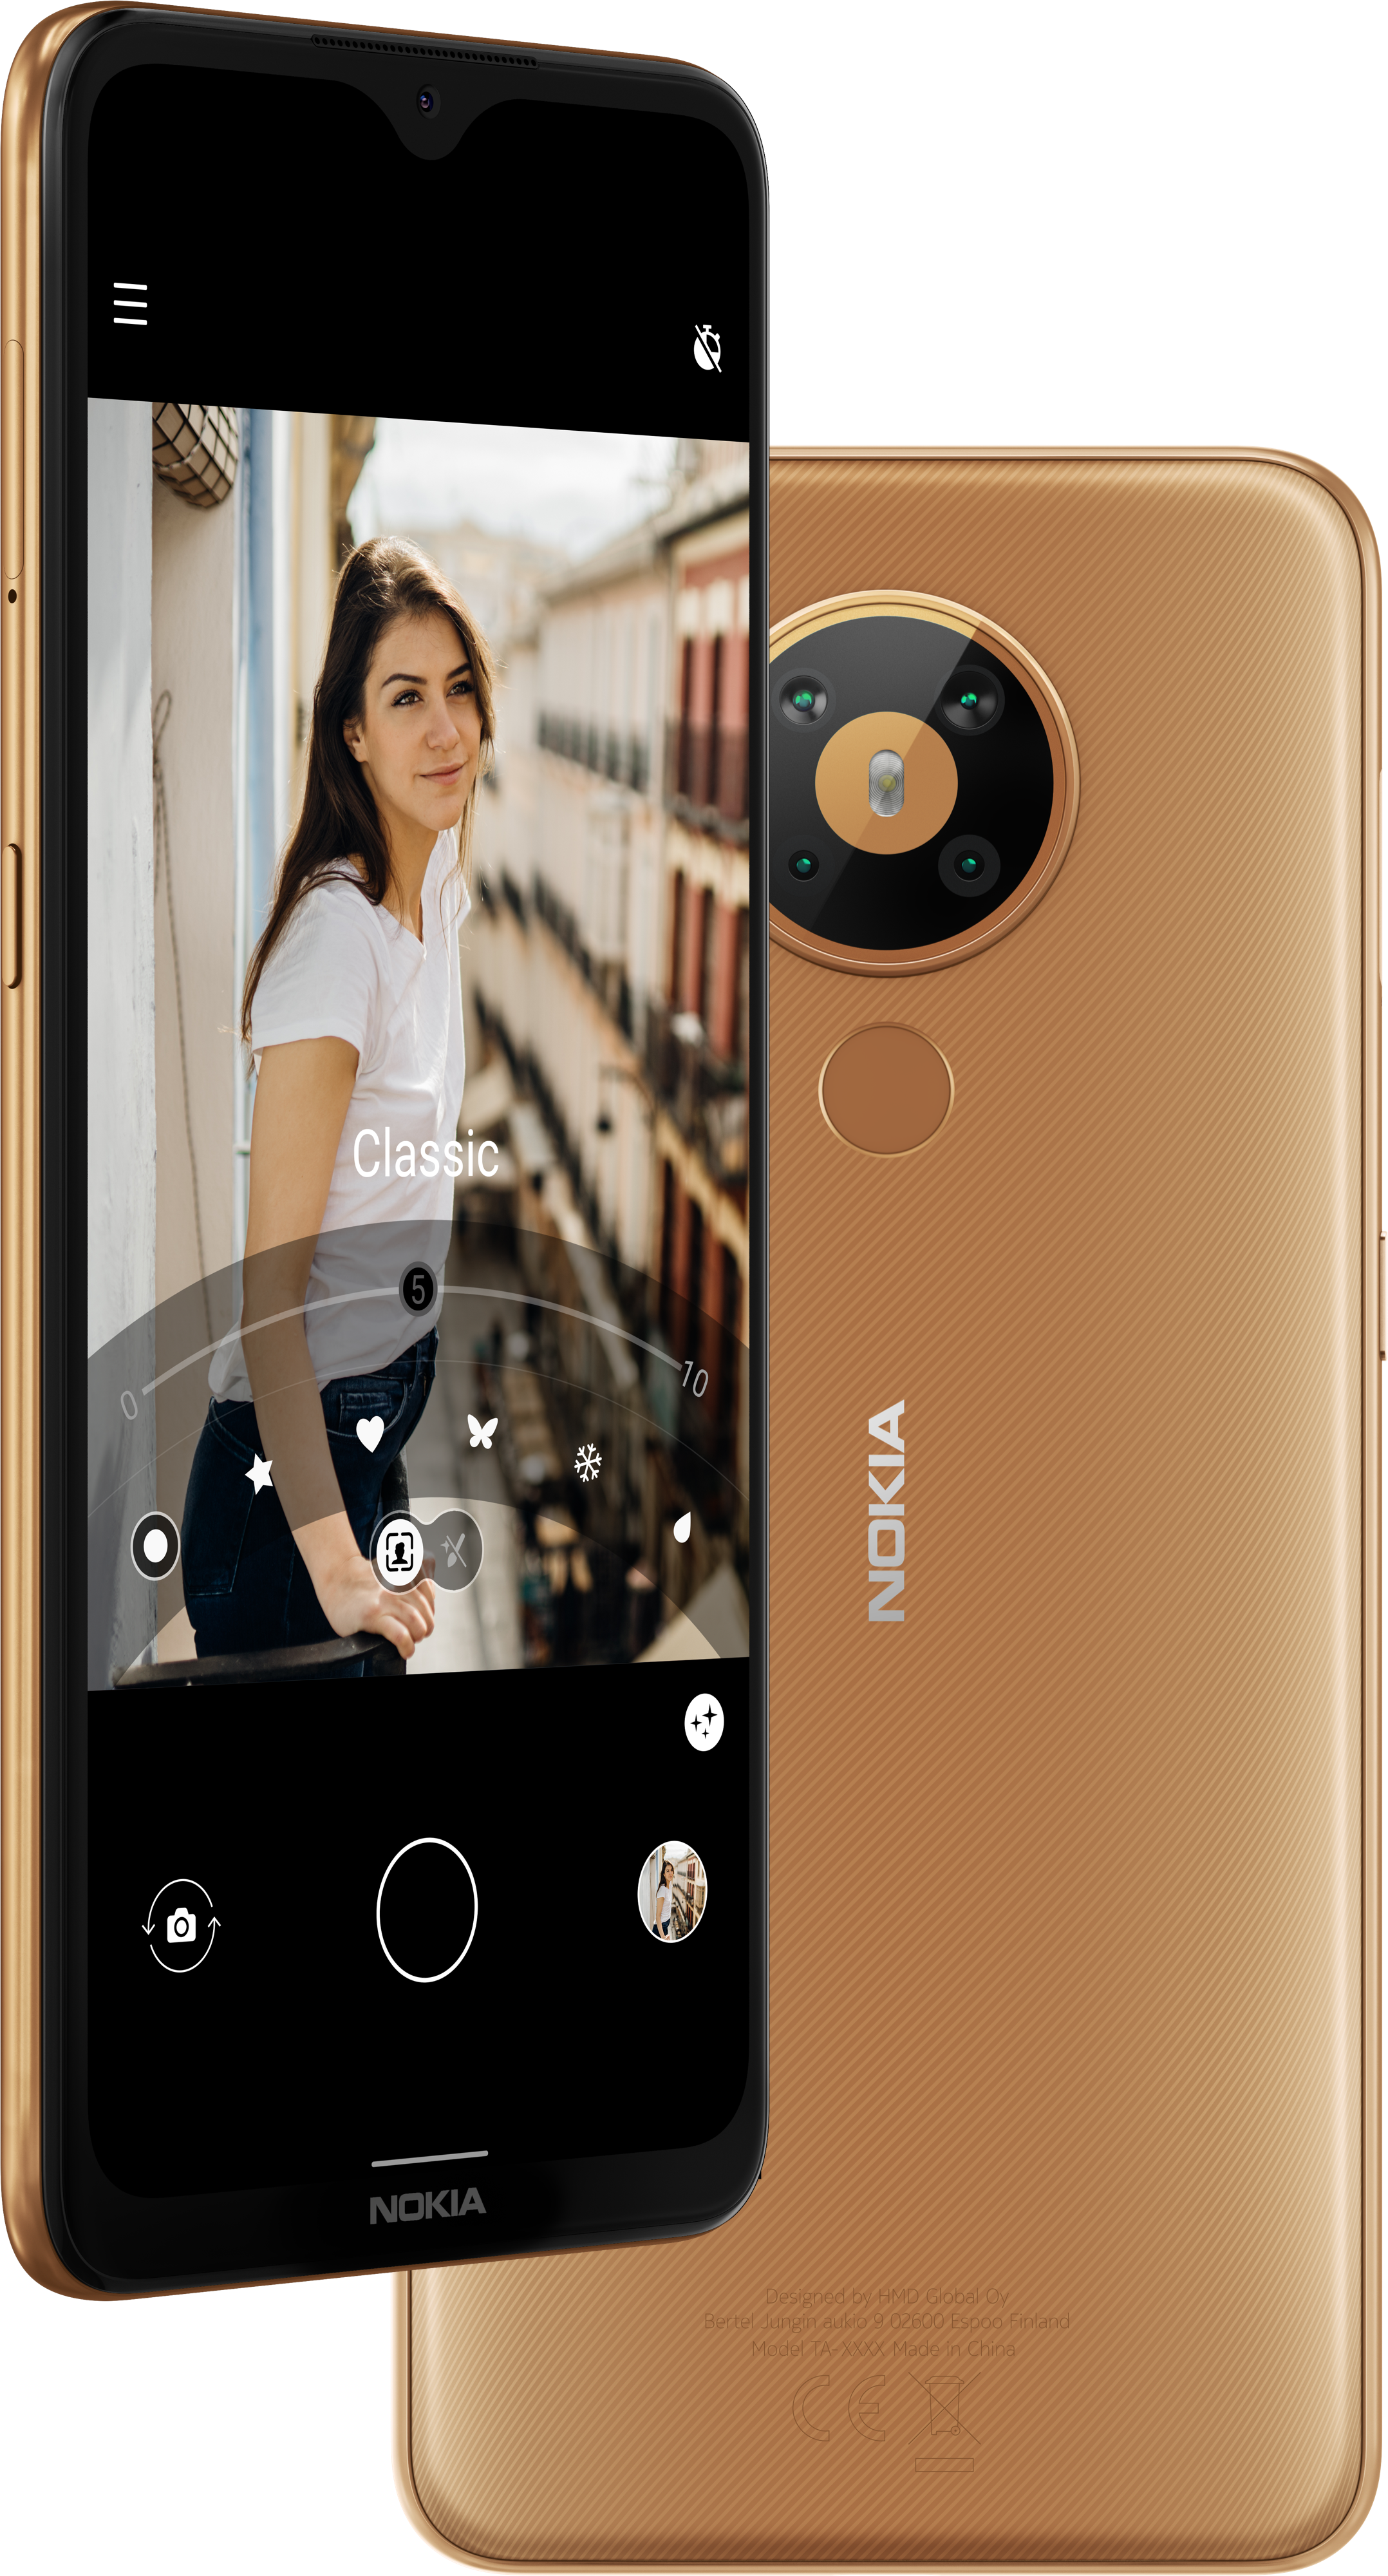  Nokia 5.3, Android 10, Unlocked Smartphone, 2-Day Battery, Single SIM, 4/64GB, 6.55-Inch Screen, 13MP Quad Camera